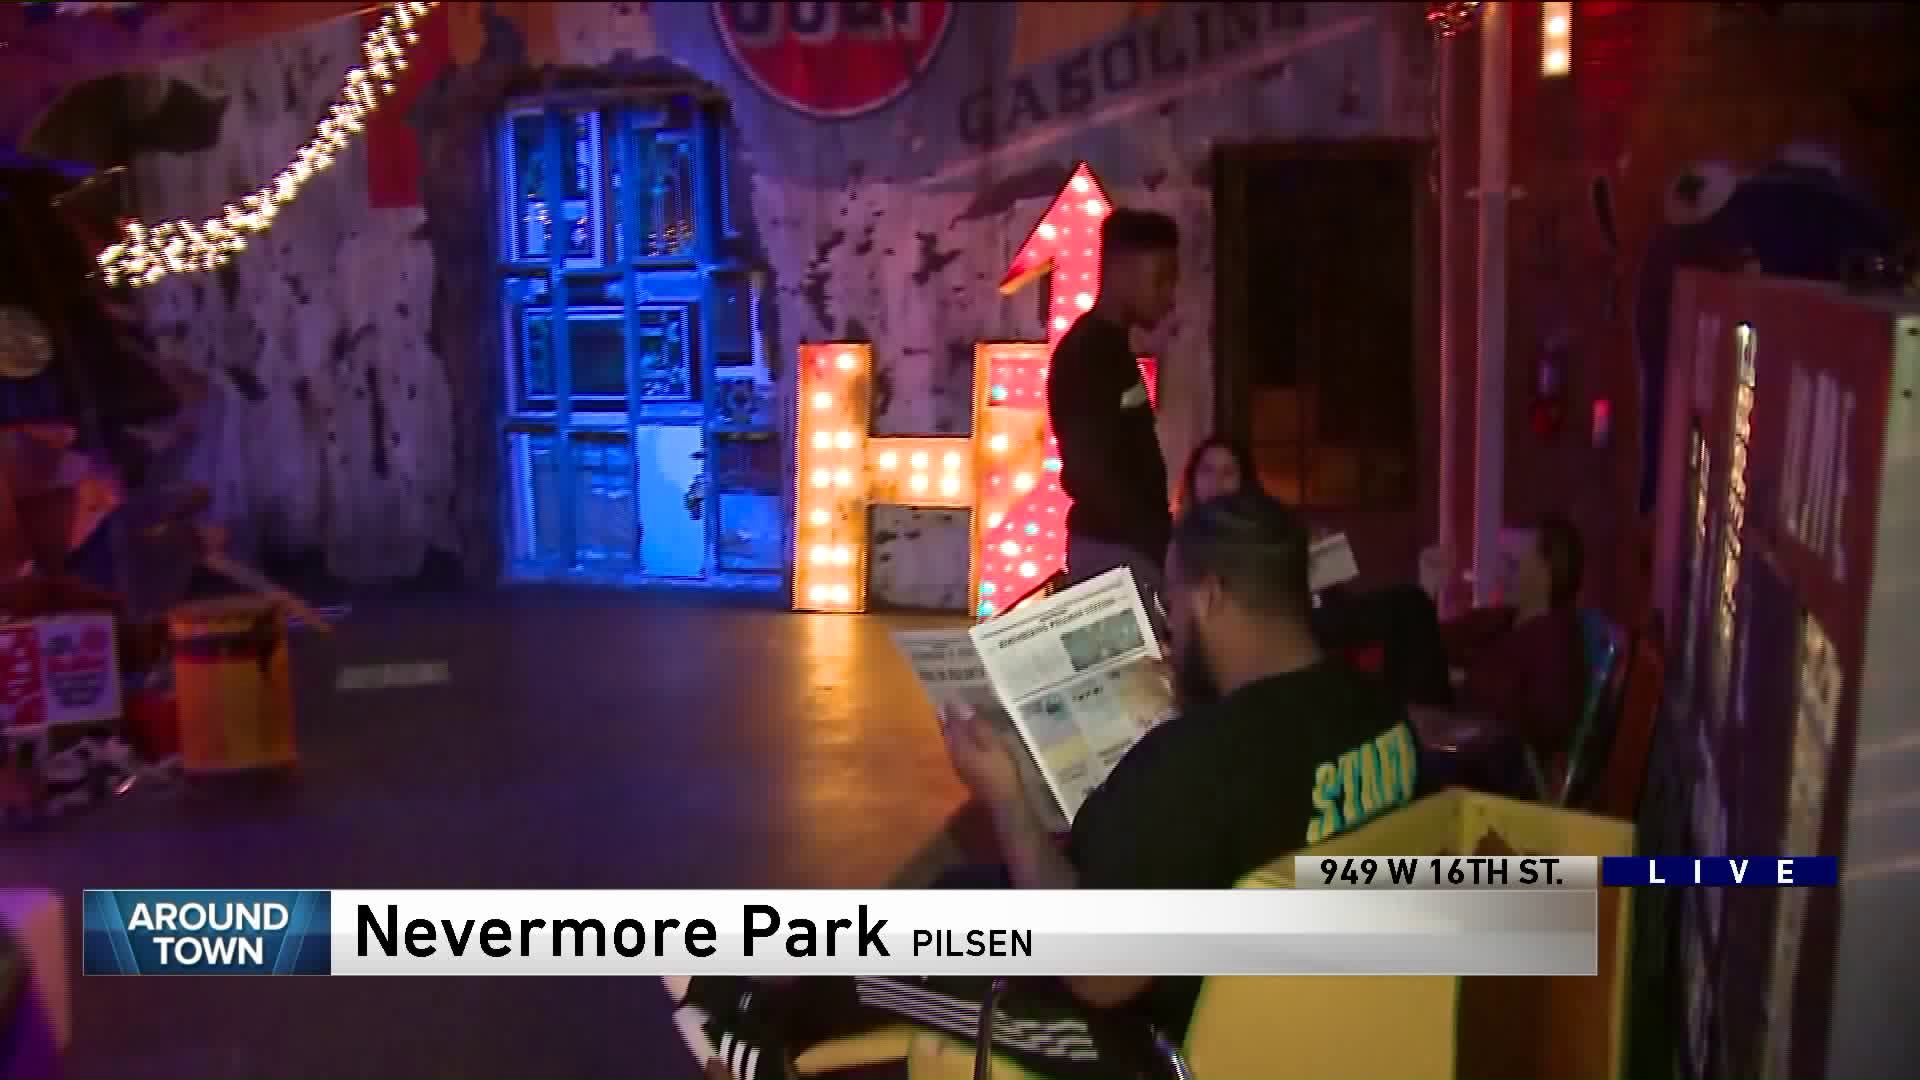 Around Town explores Nevermore Park